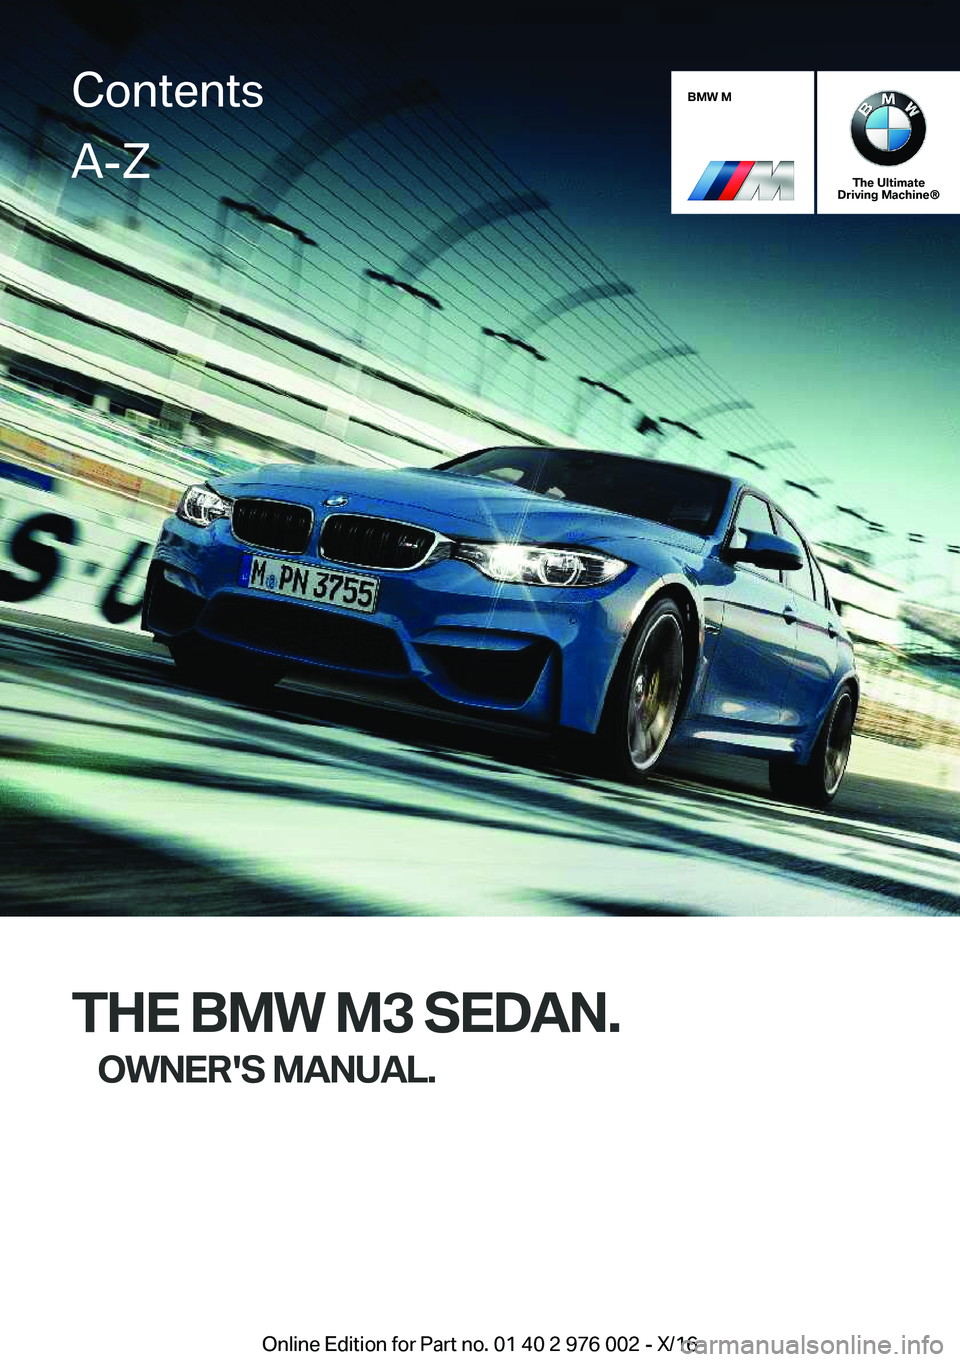 BMW M3 2017  Owners Manual �B�M�W��M
�T�h�e��U�l�t�i�m�a�t�e
�D�r�i�v�i�n�g��M�a�c�h�i�n�e�n
�T�H�E��B�M�W��M�3��S�E�D�A�N�.
�O�W�N�E�R�'�S��M�A�N�U�A�L�.
�C�o�n�t�e�n�t�s�A�-�Z
�O�n�l�i�n�e� �E�d�i�t�i�o�n� �f�o�r� 